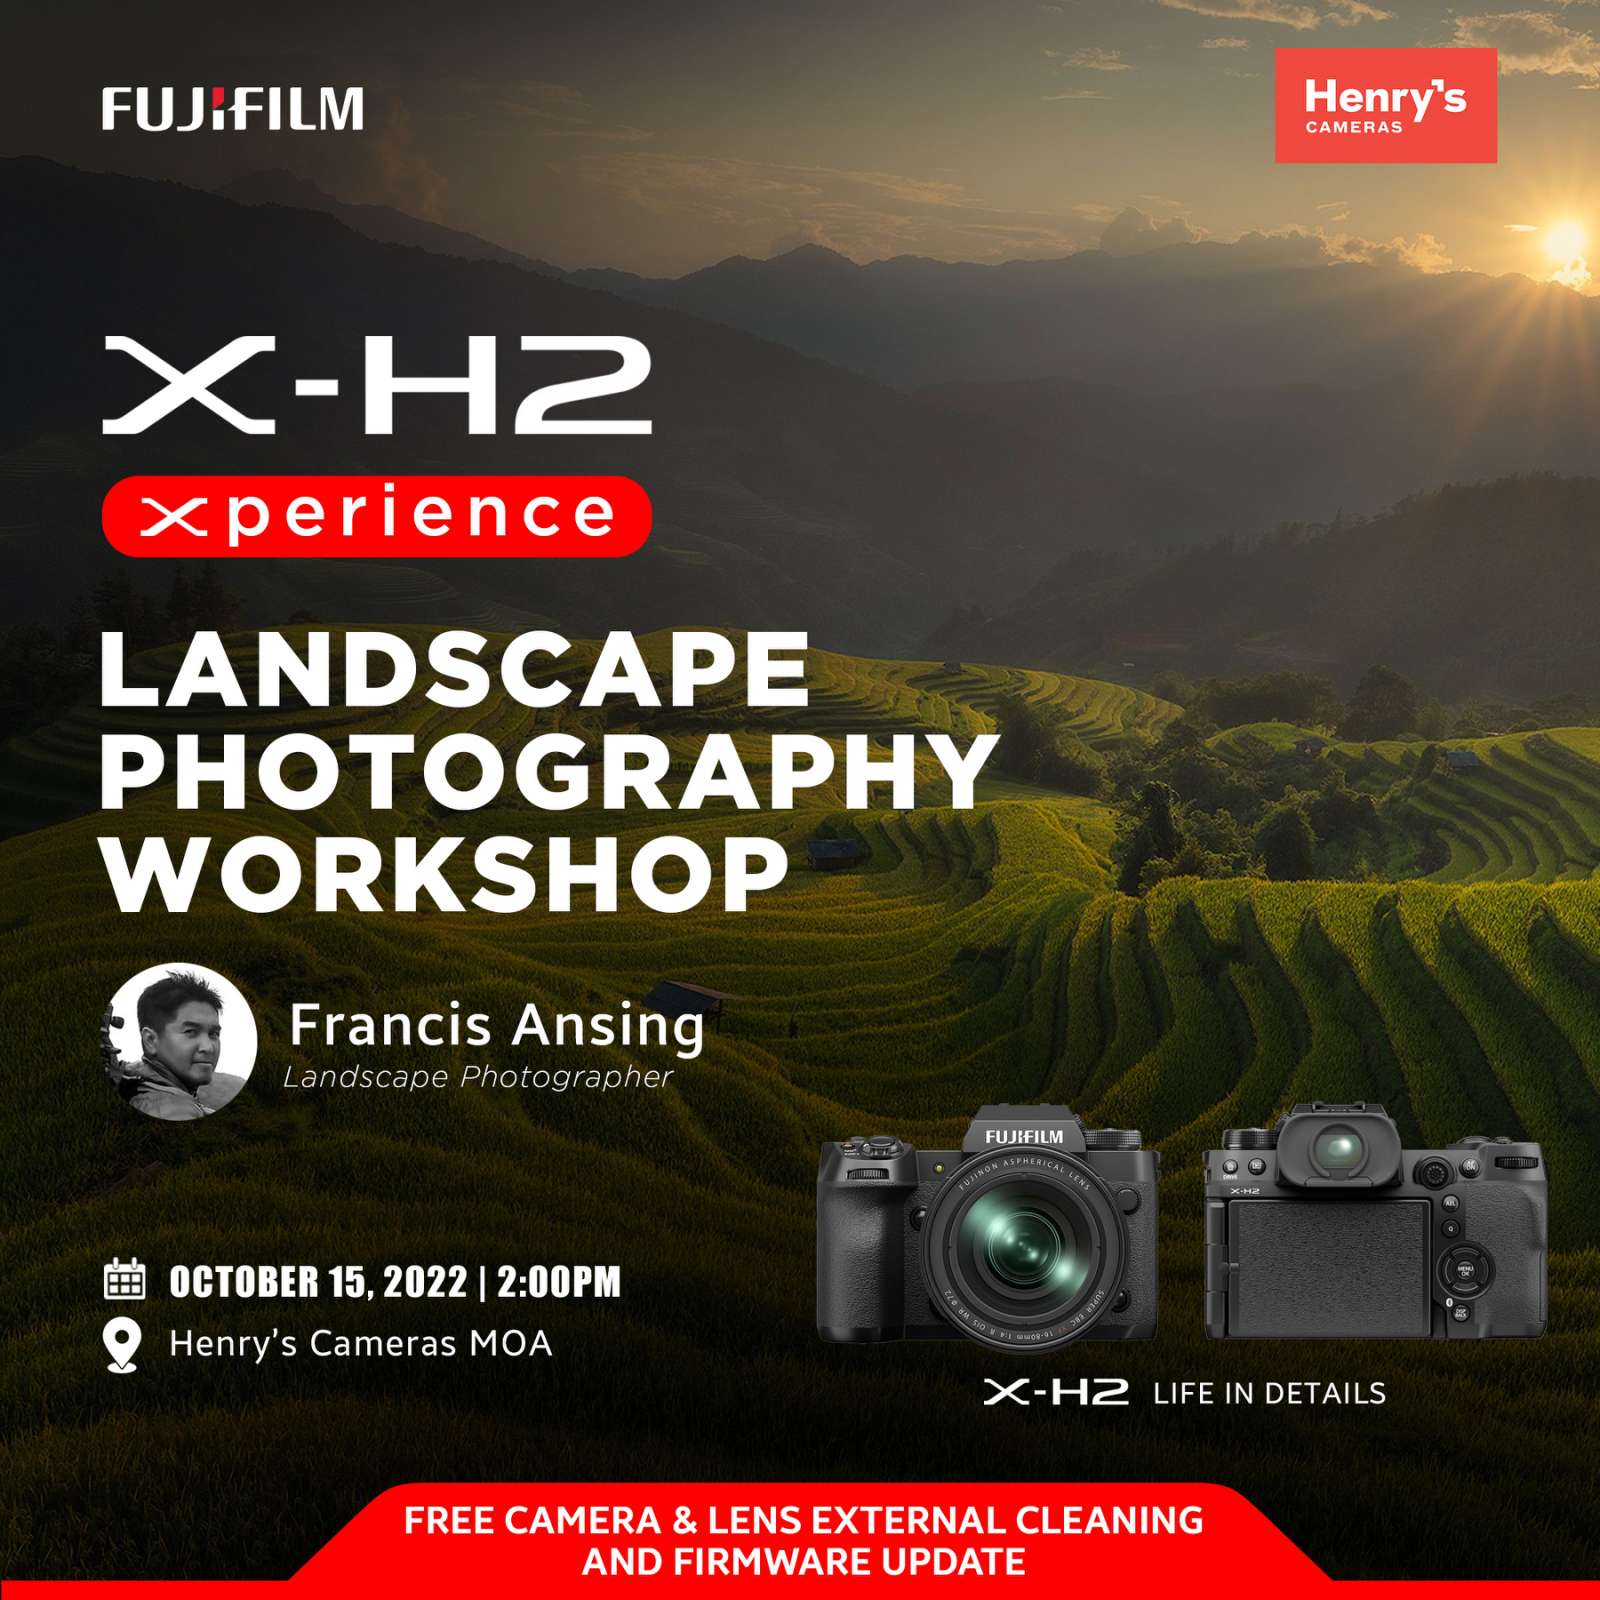 Fujifilm X-H2 Xperience Landscape Photography Workshop